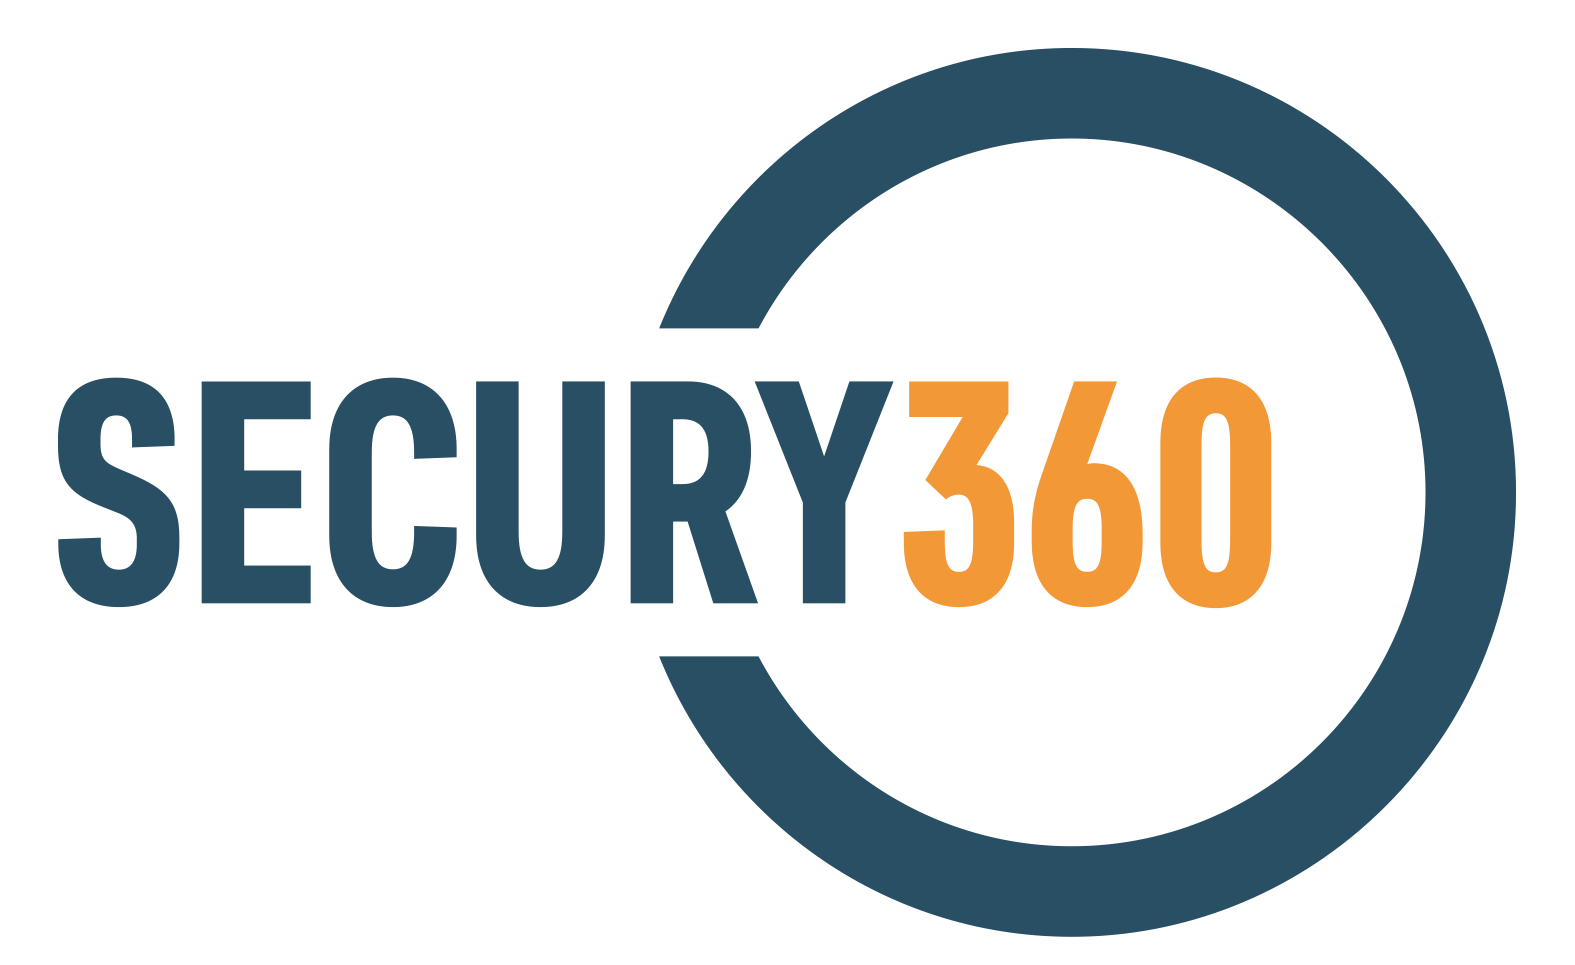 Secury360